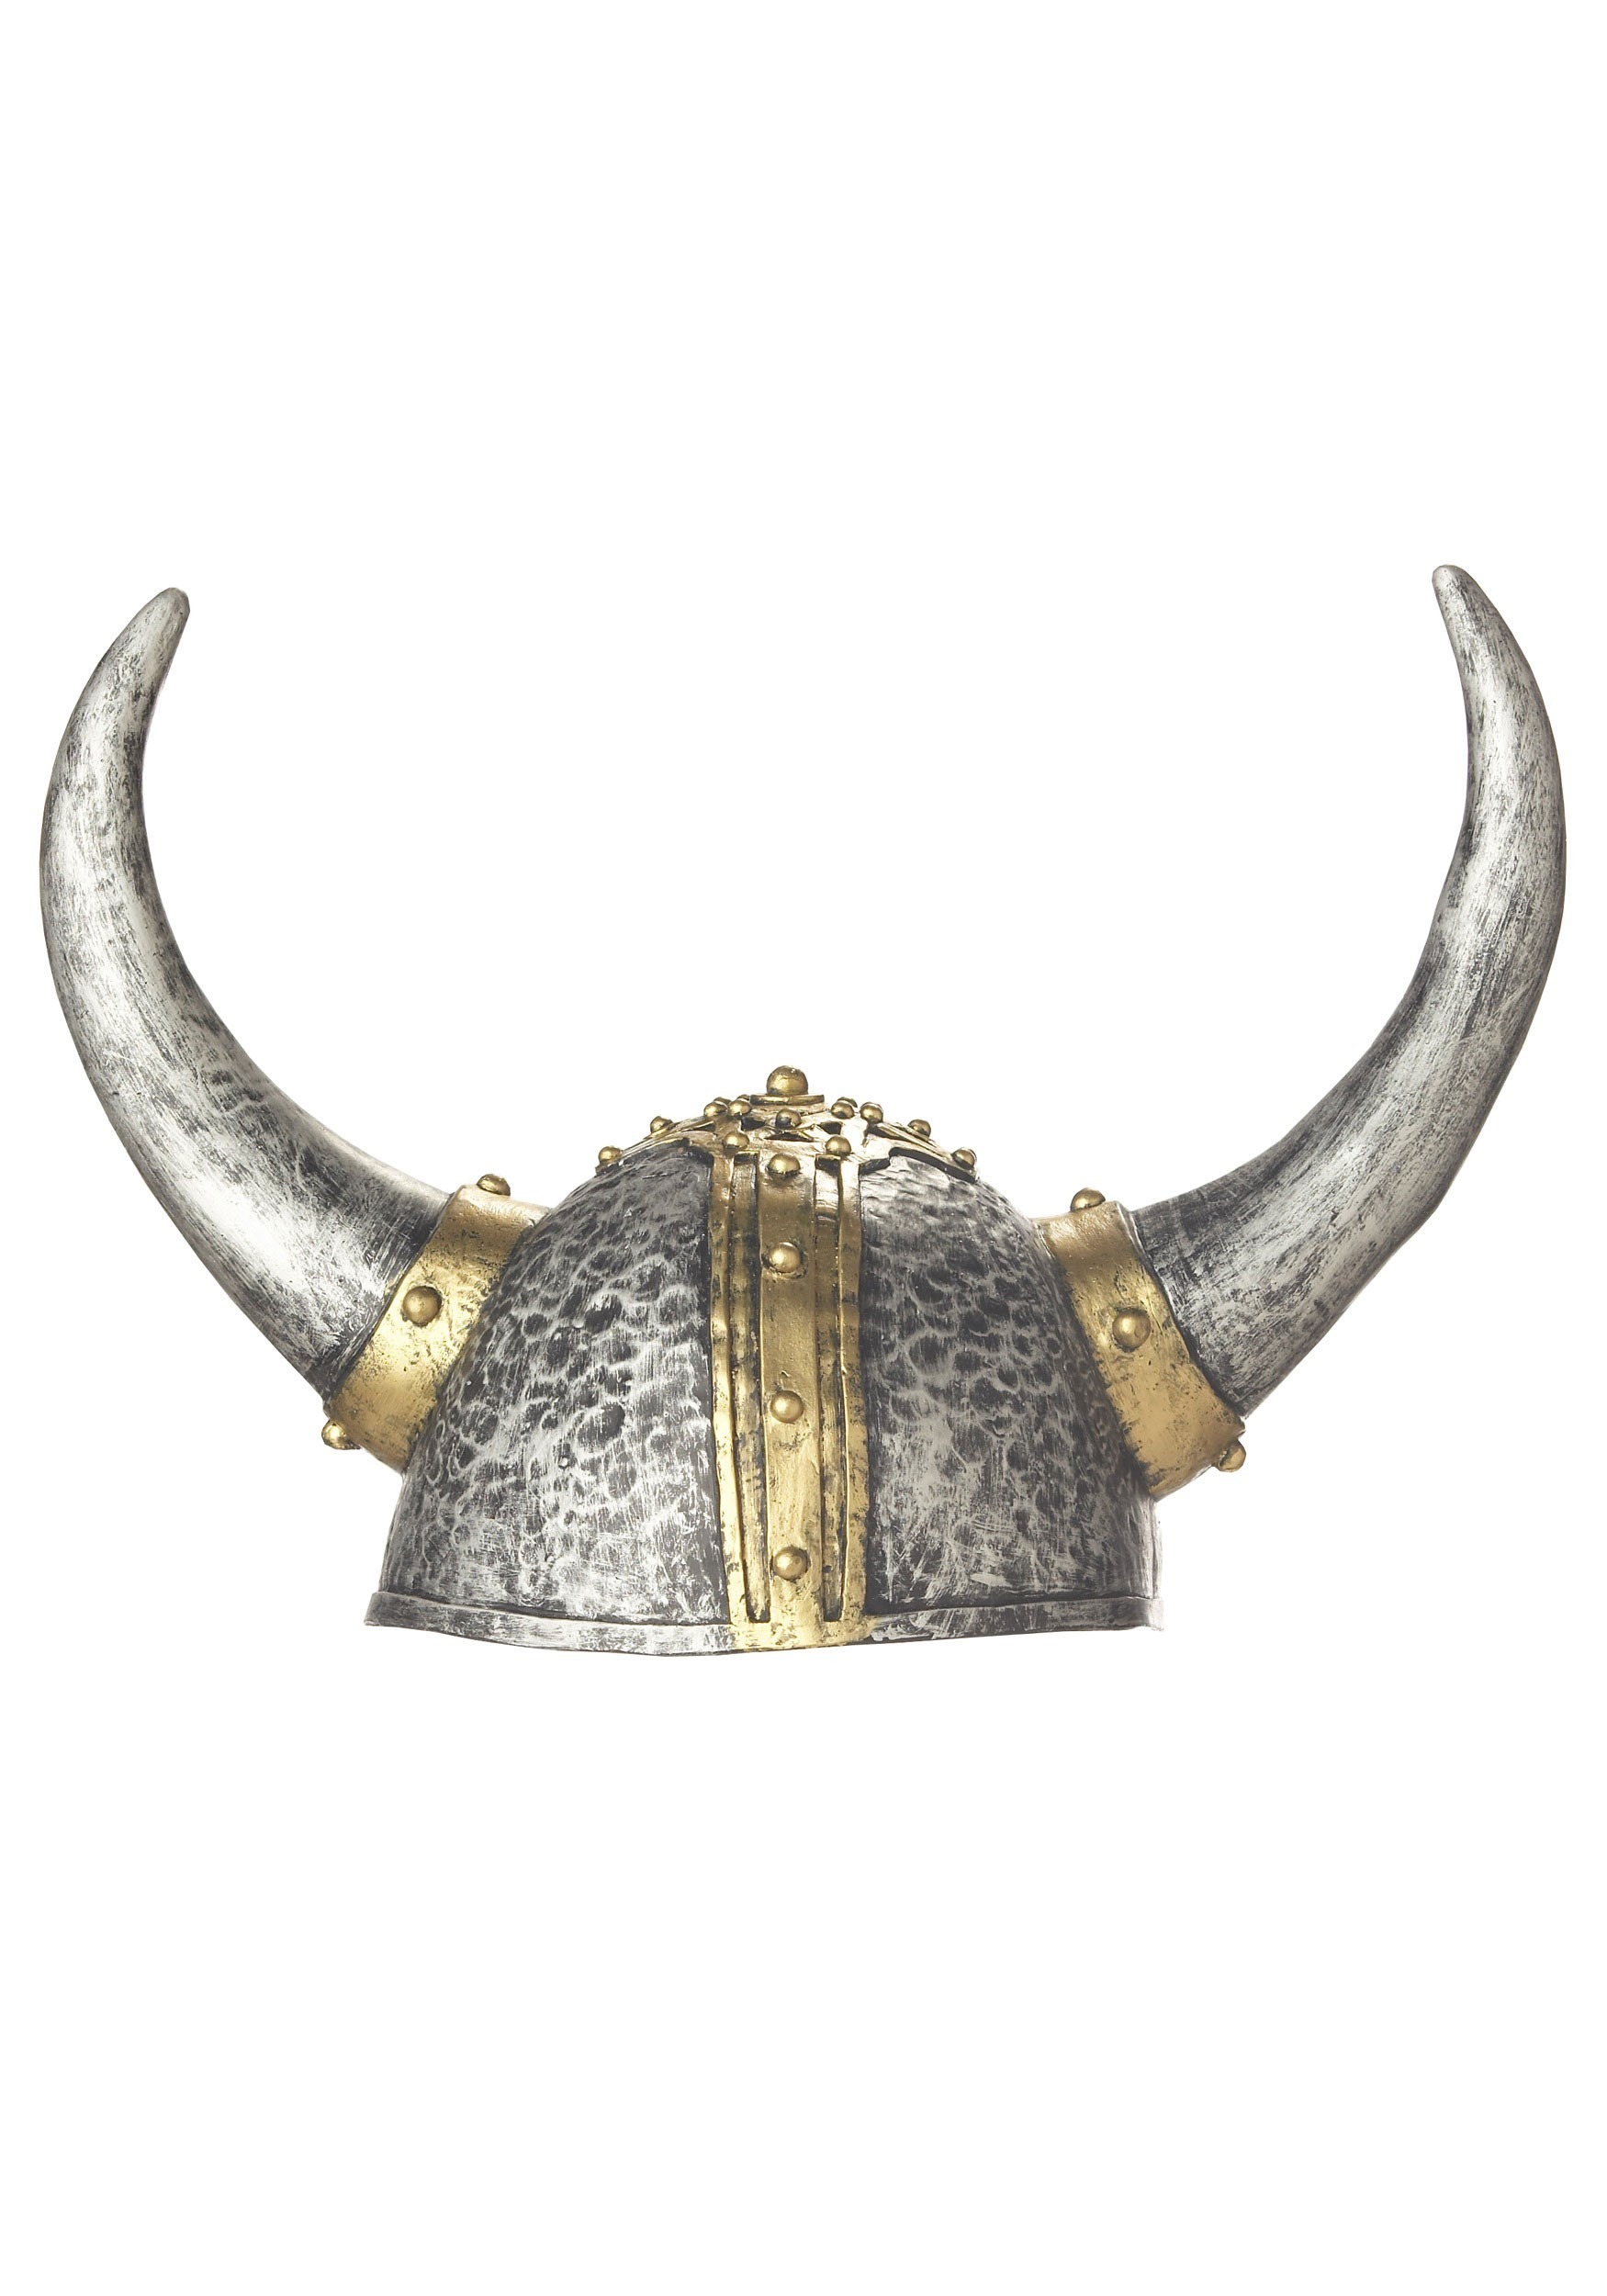 viking-helmet.jpg